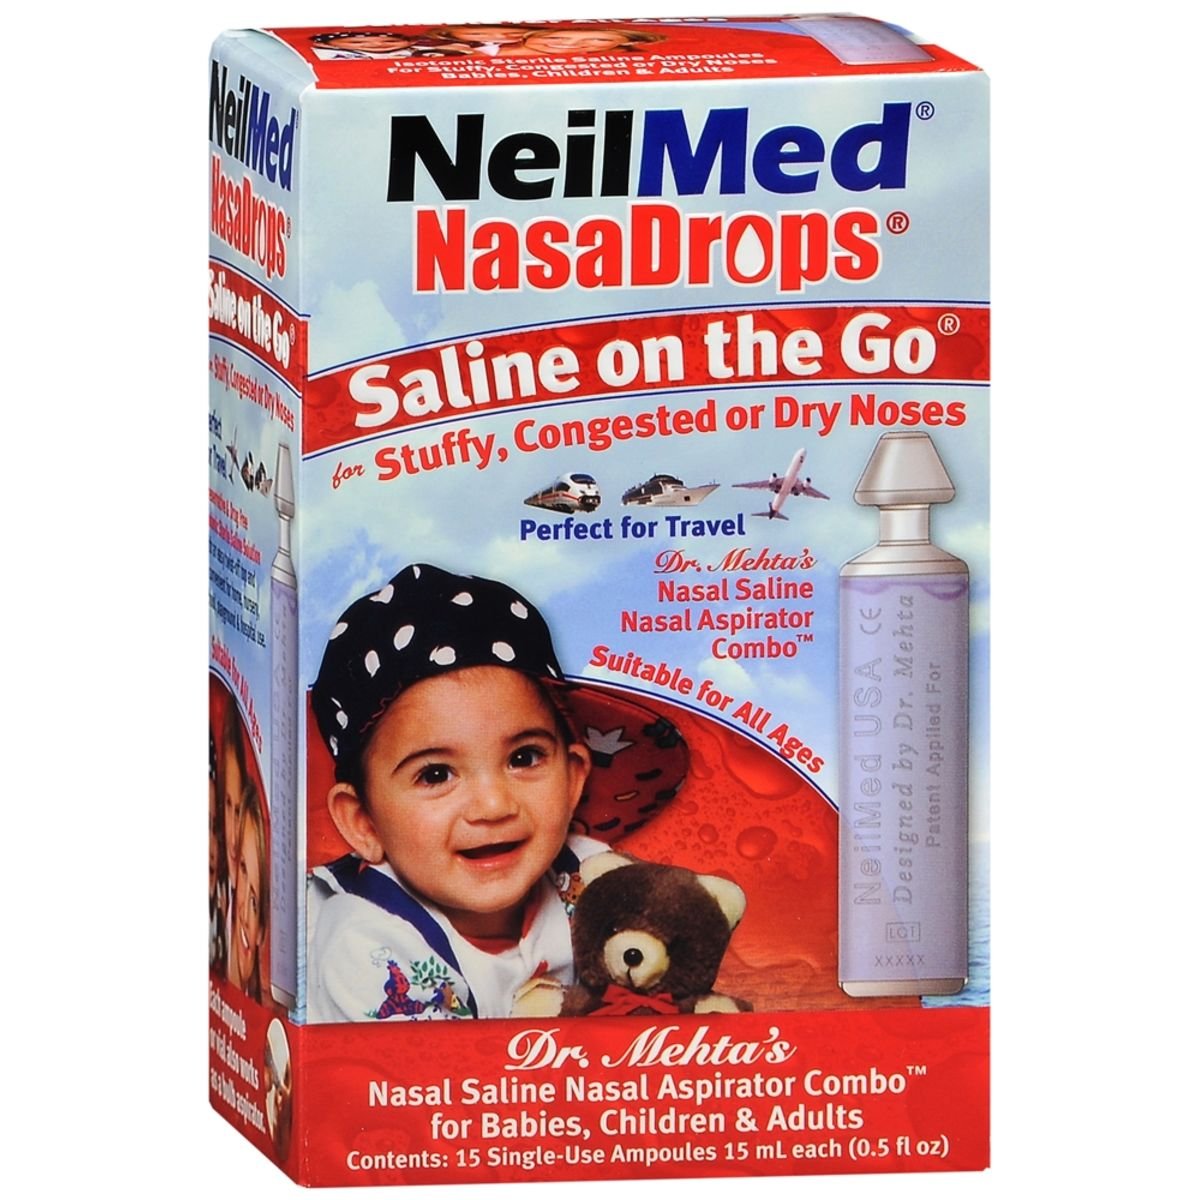 NeilMed Naspira Plus Nasal-Oral Aspirator & Saline Vials - 8 vials